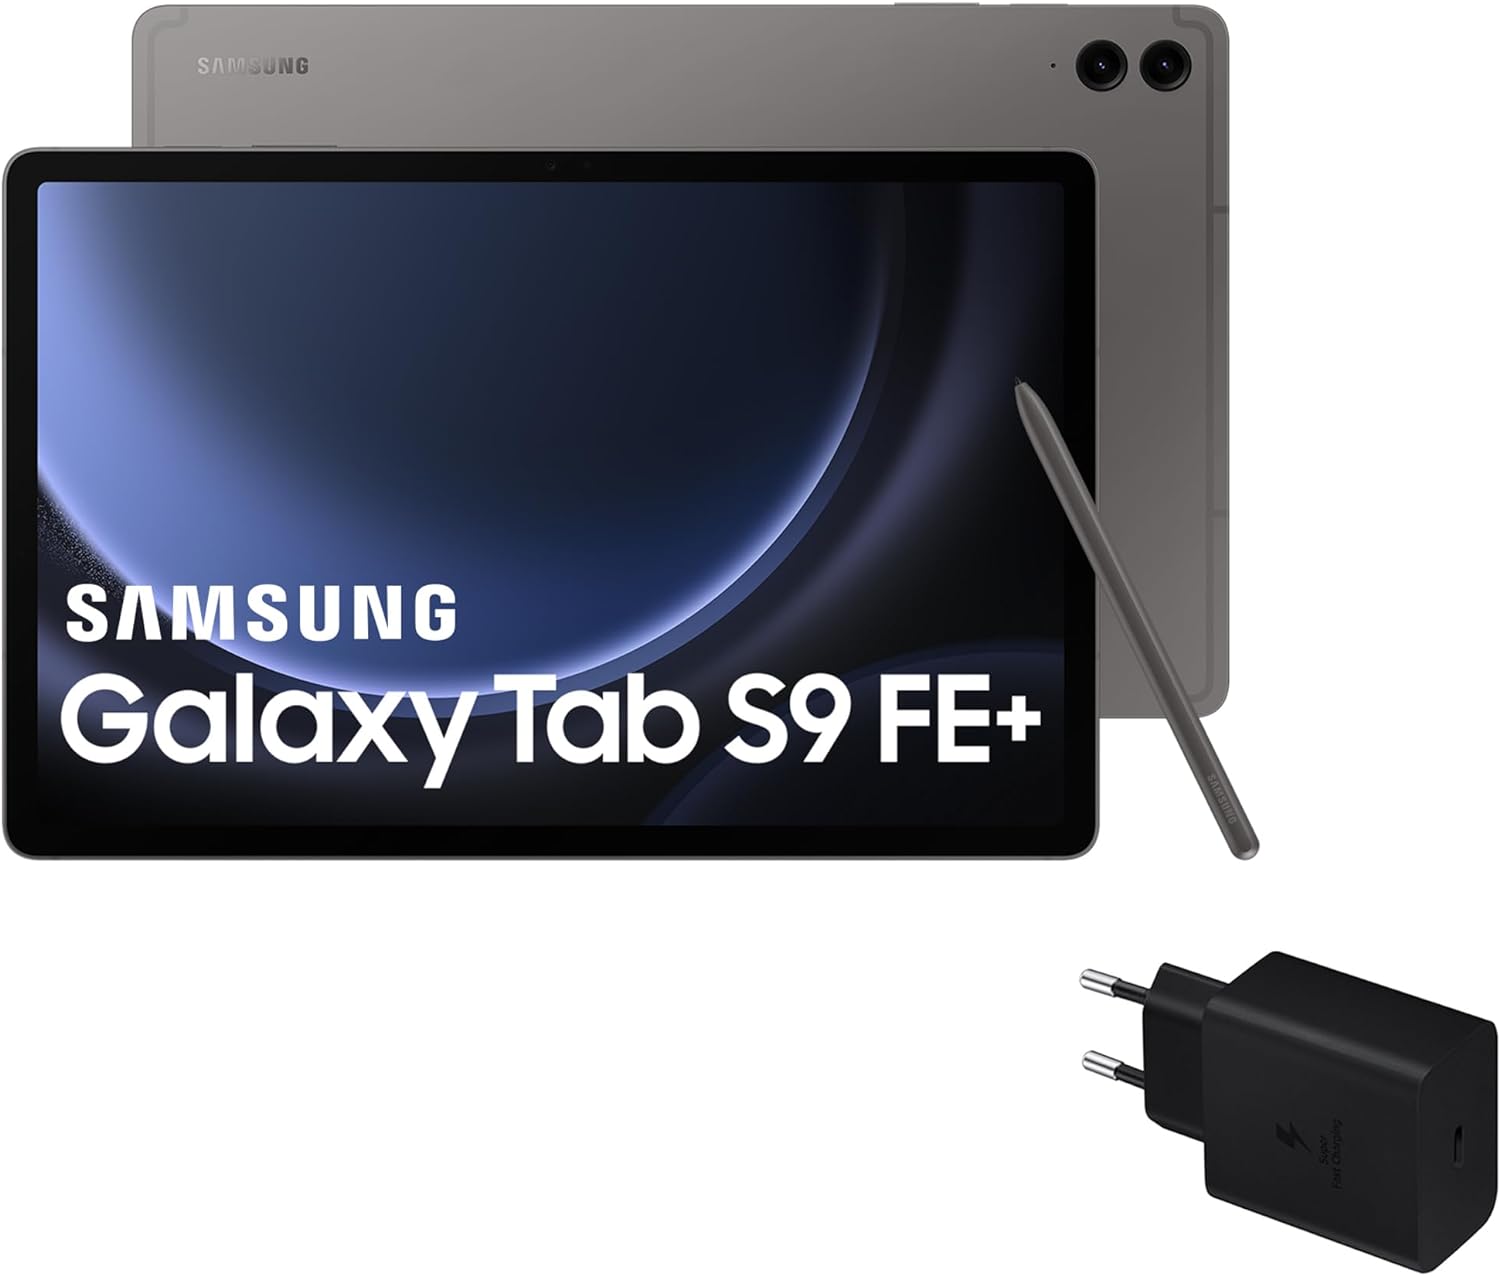 Samsung Galaxy Tab S9 FE+ vs. Samsung Galaxy Tab S9 FE